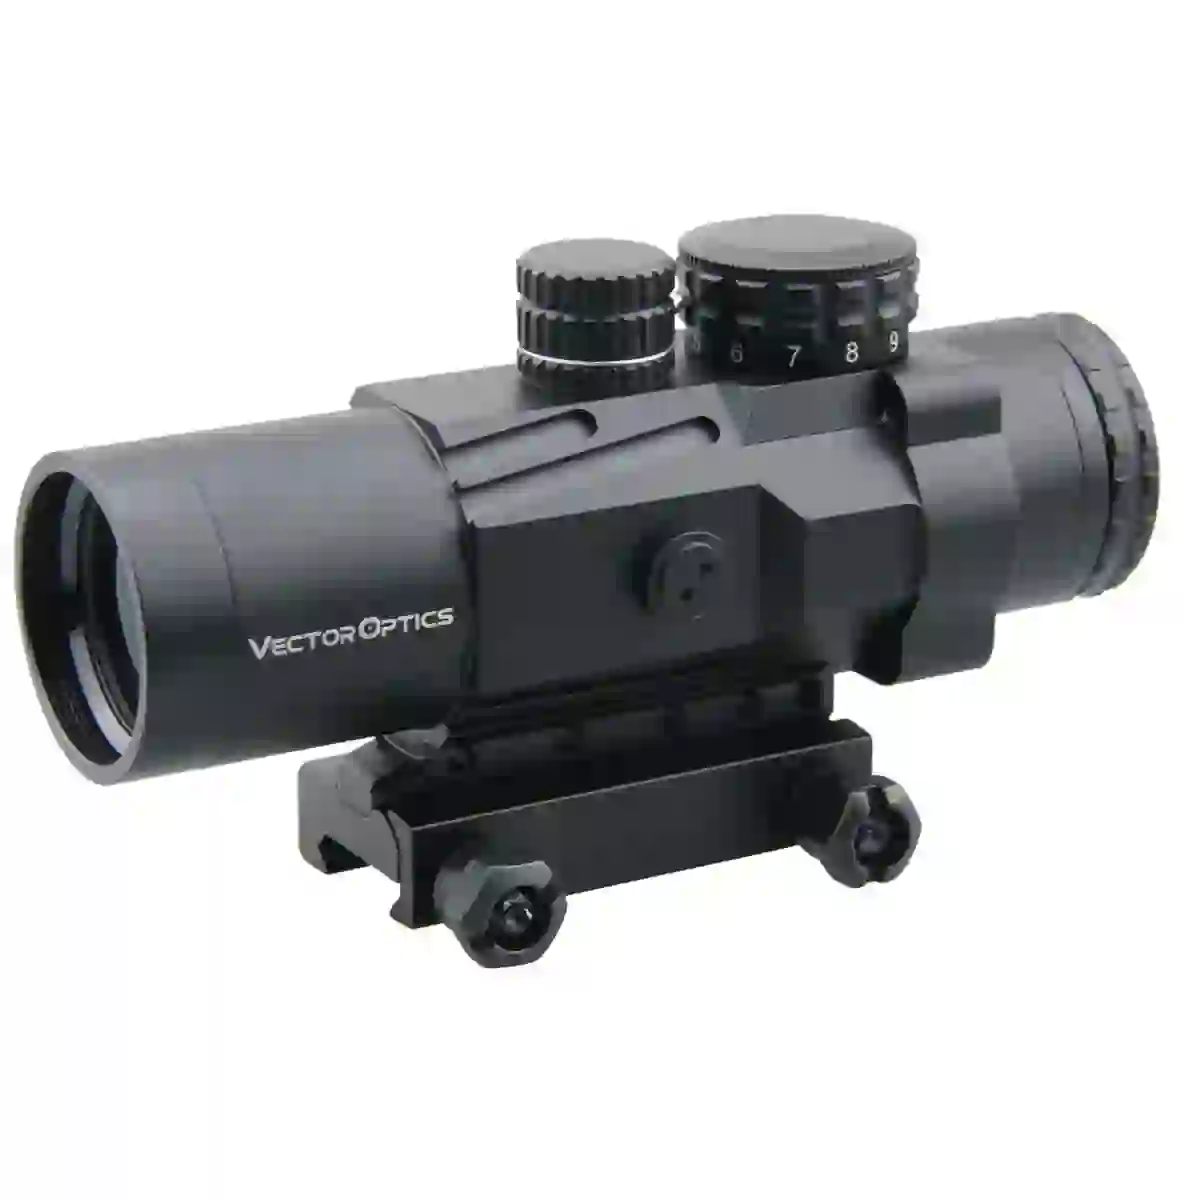 Calypos 3x32SFP Prism Scope Riflescope-Vector Optics - Rifle Scope